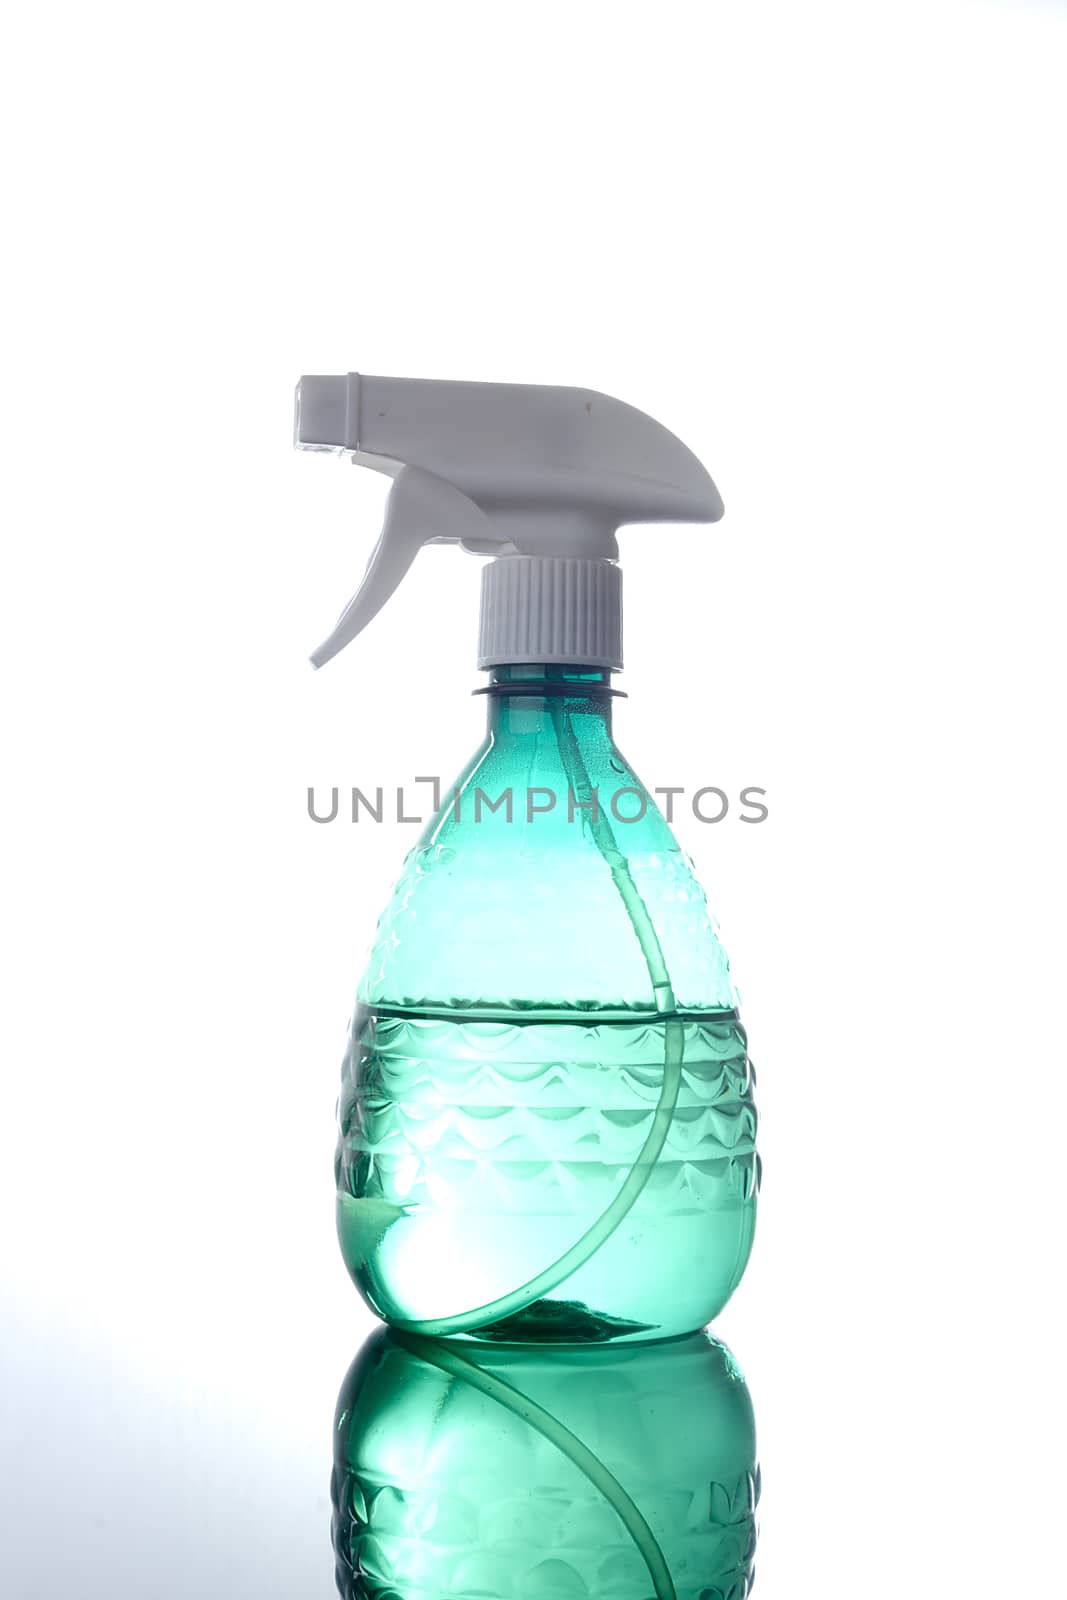 Blue plastic spray bottle on reflective surface